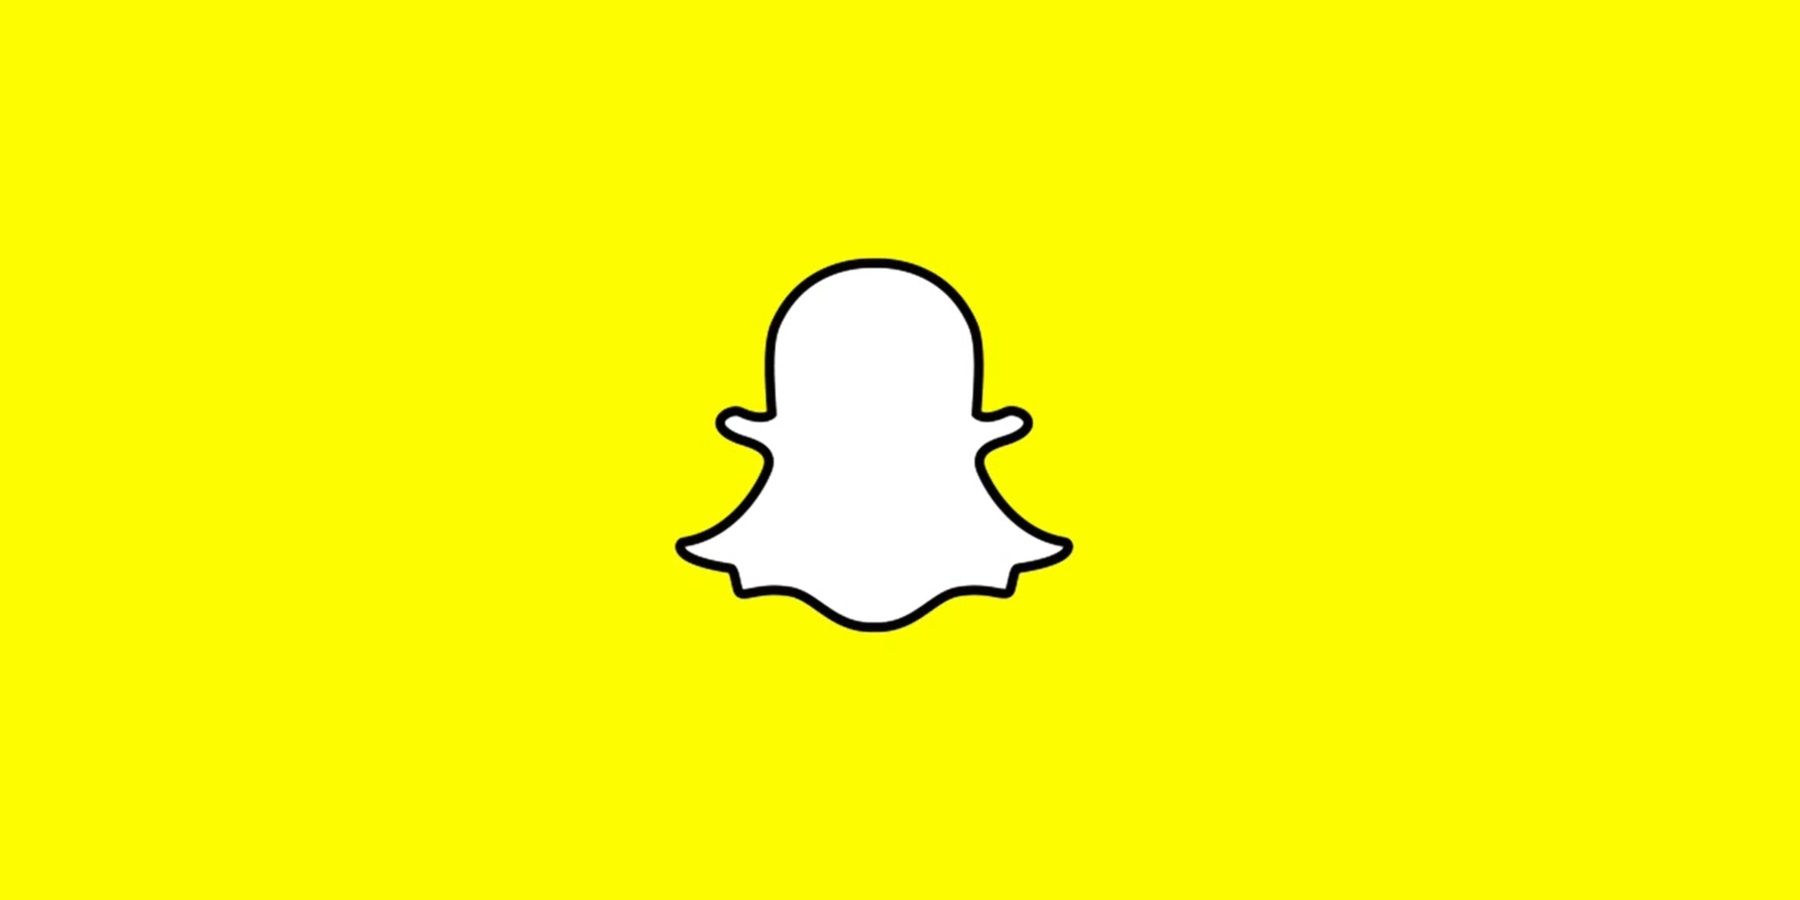 👻 Snapchat Emoji Meanings — 💛 Friend